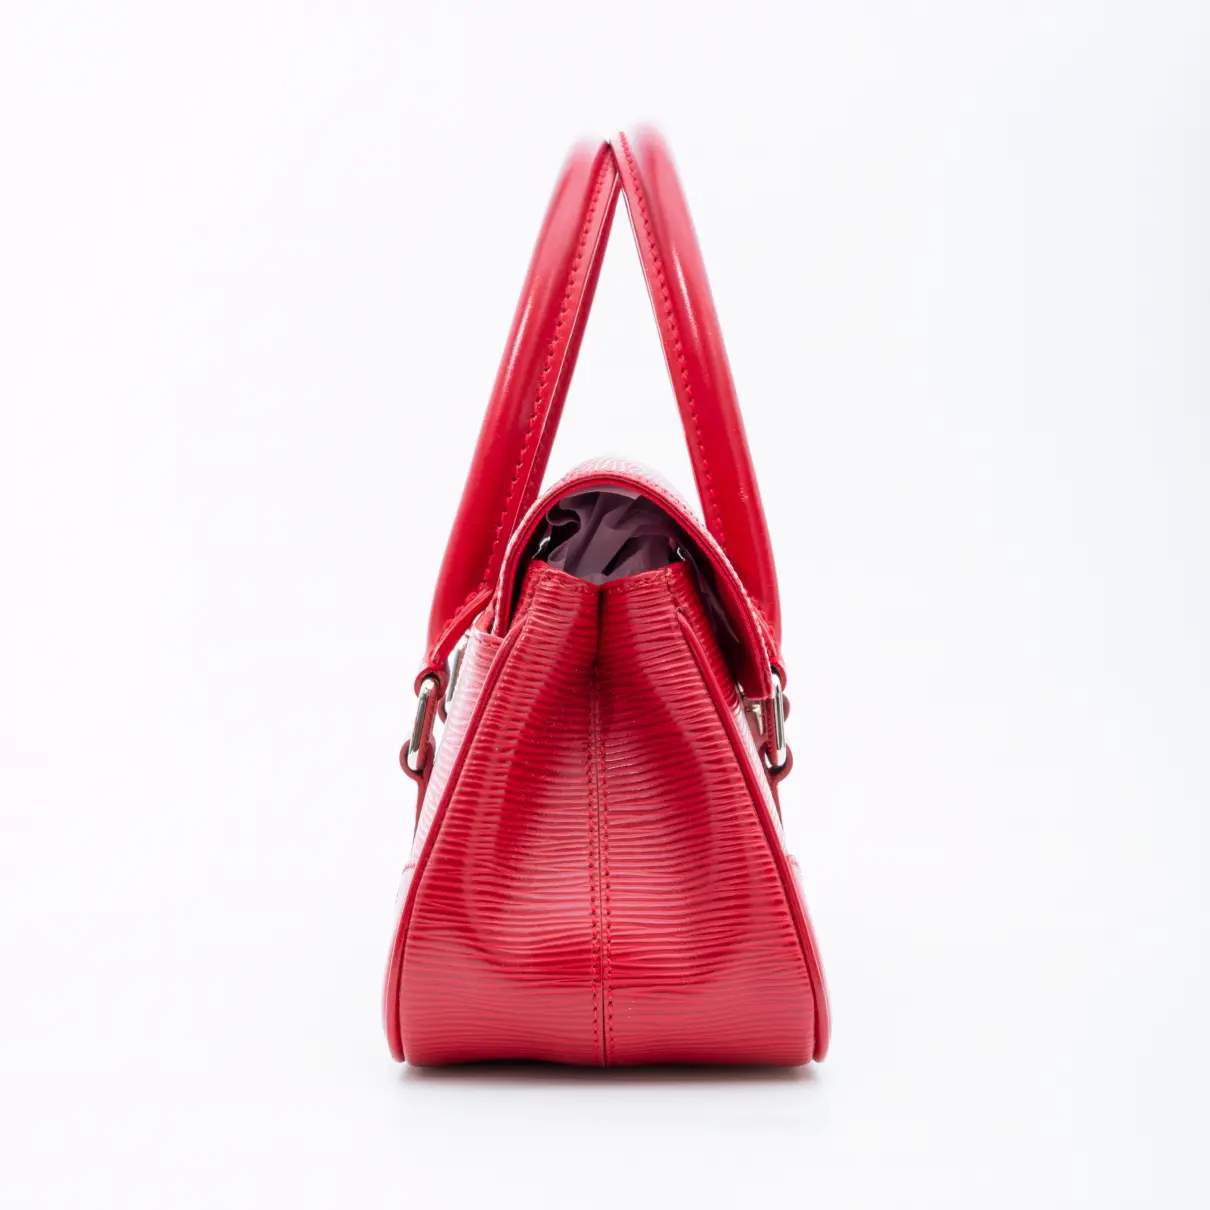 Buy Louis Vuitton Segur leather handbag online